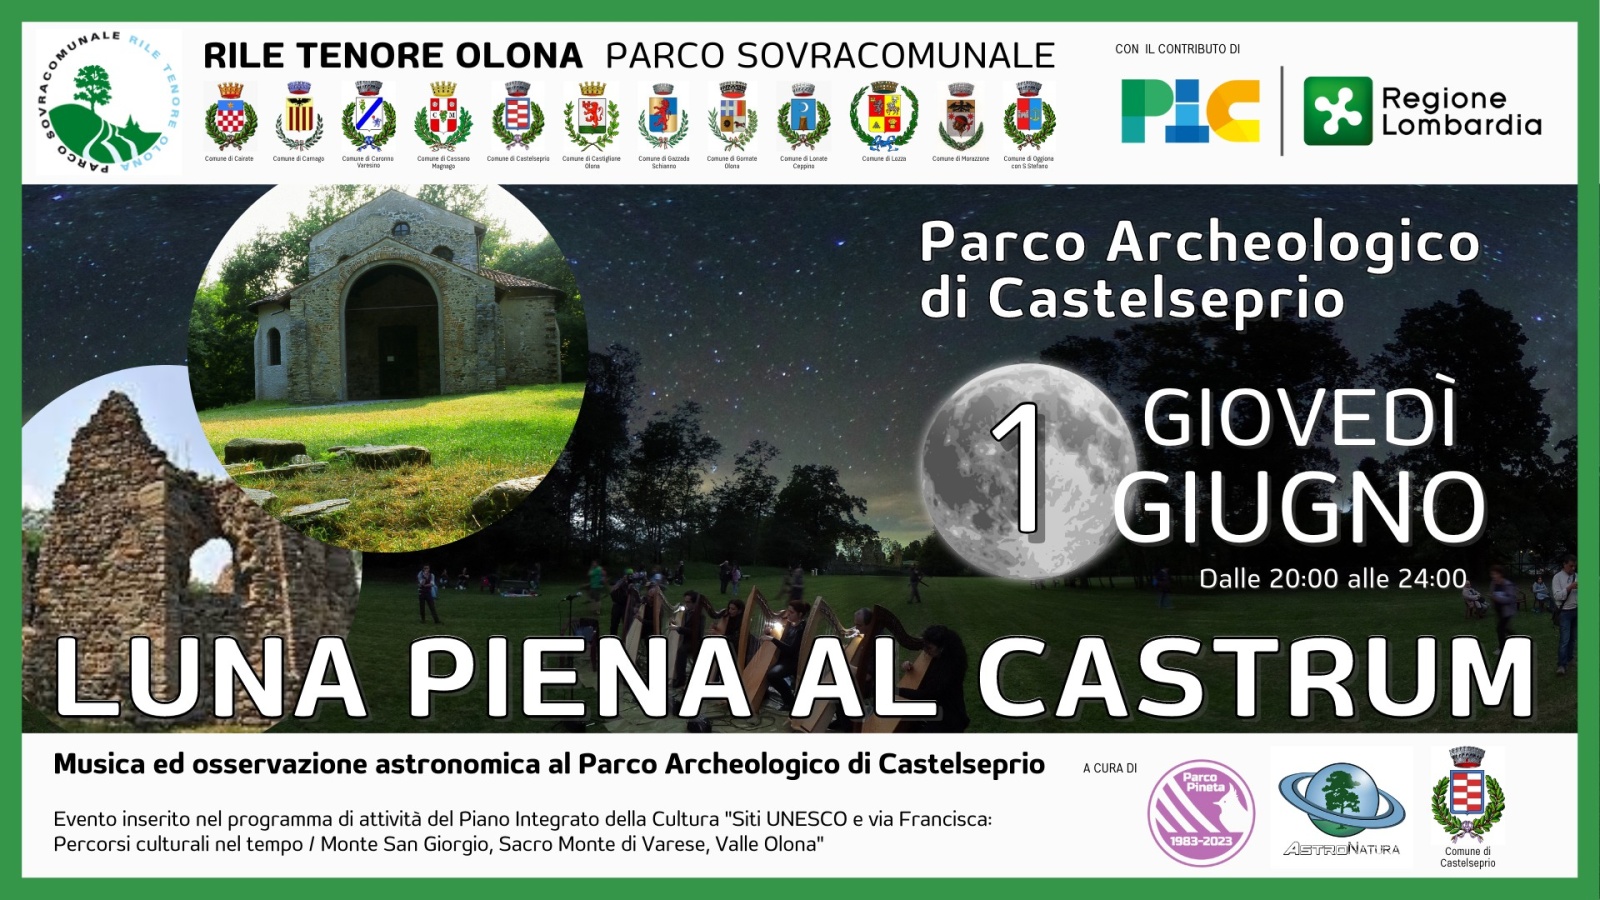 LUNA PIENA AL CASTRUM - Parco Archeologico Castelseprio